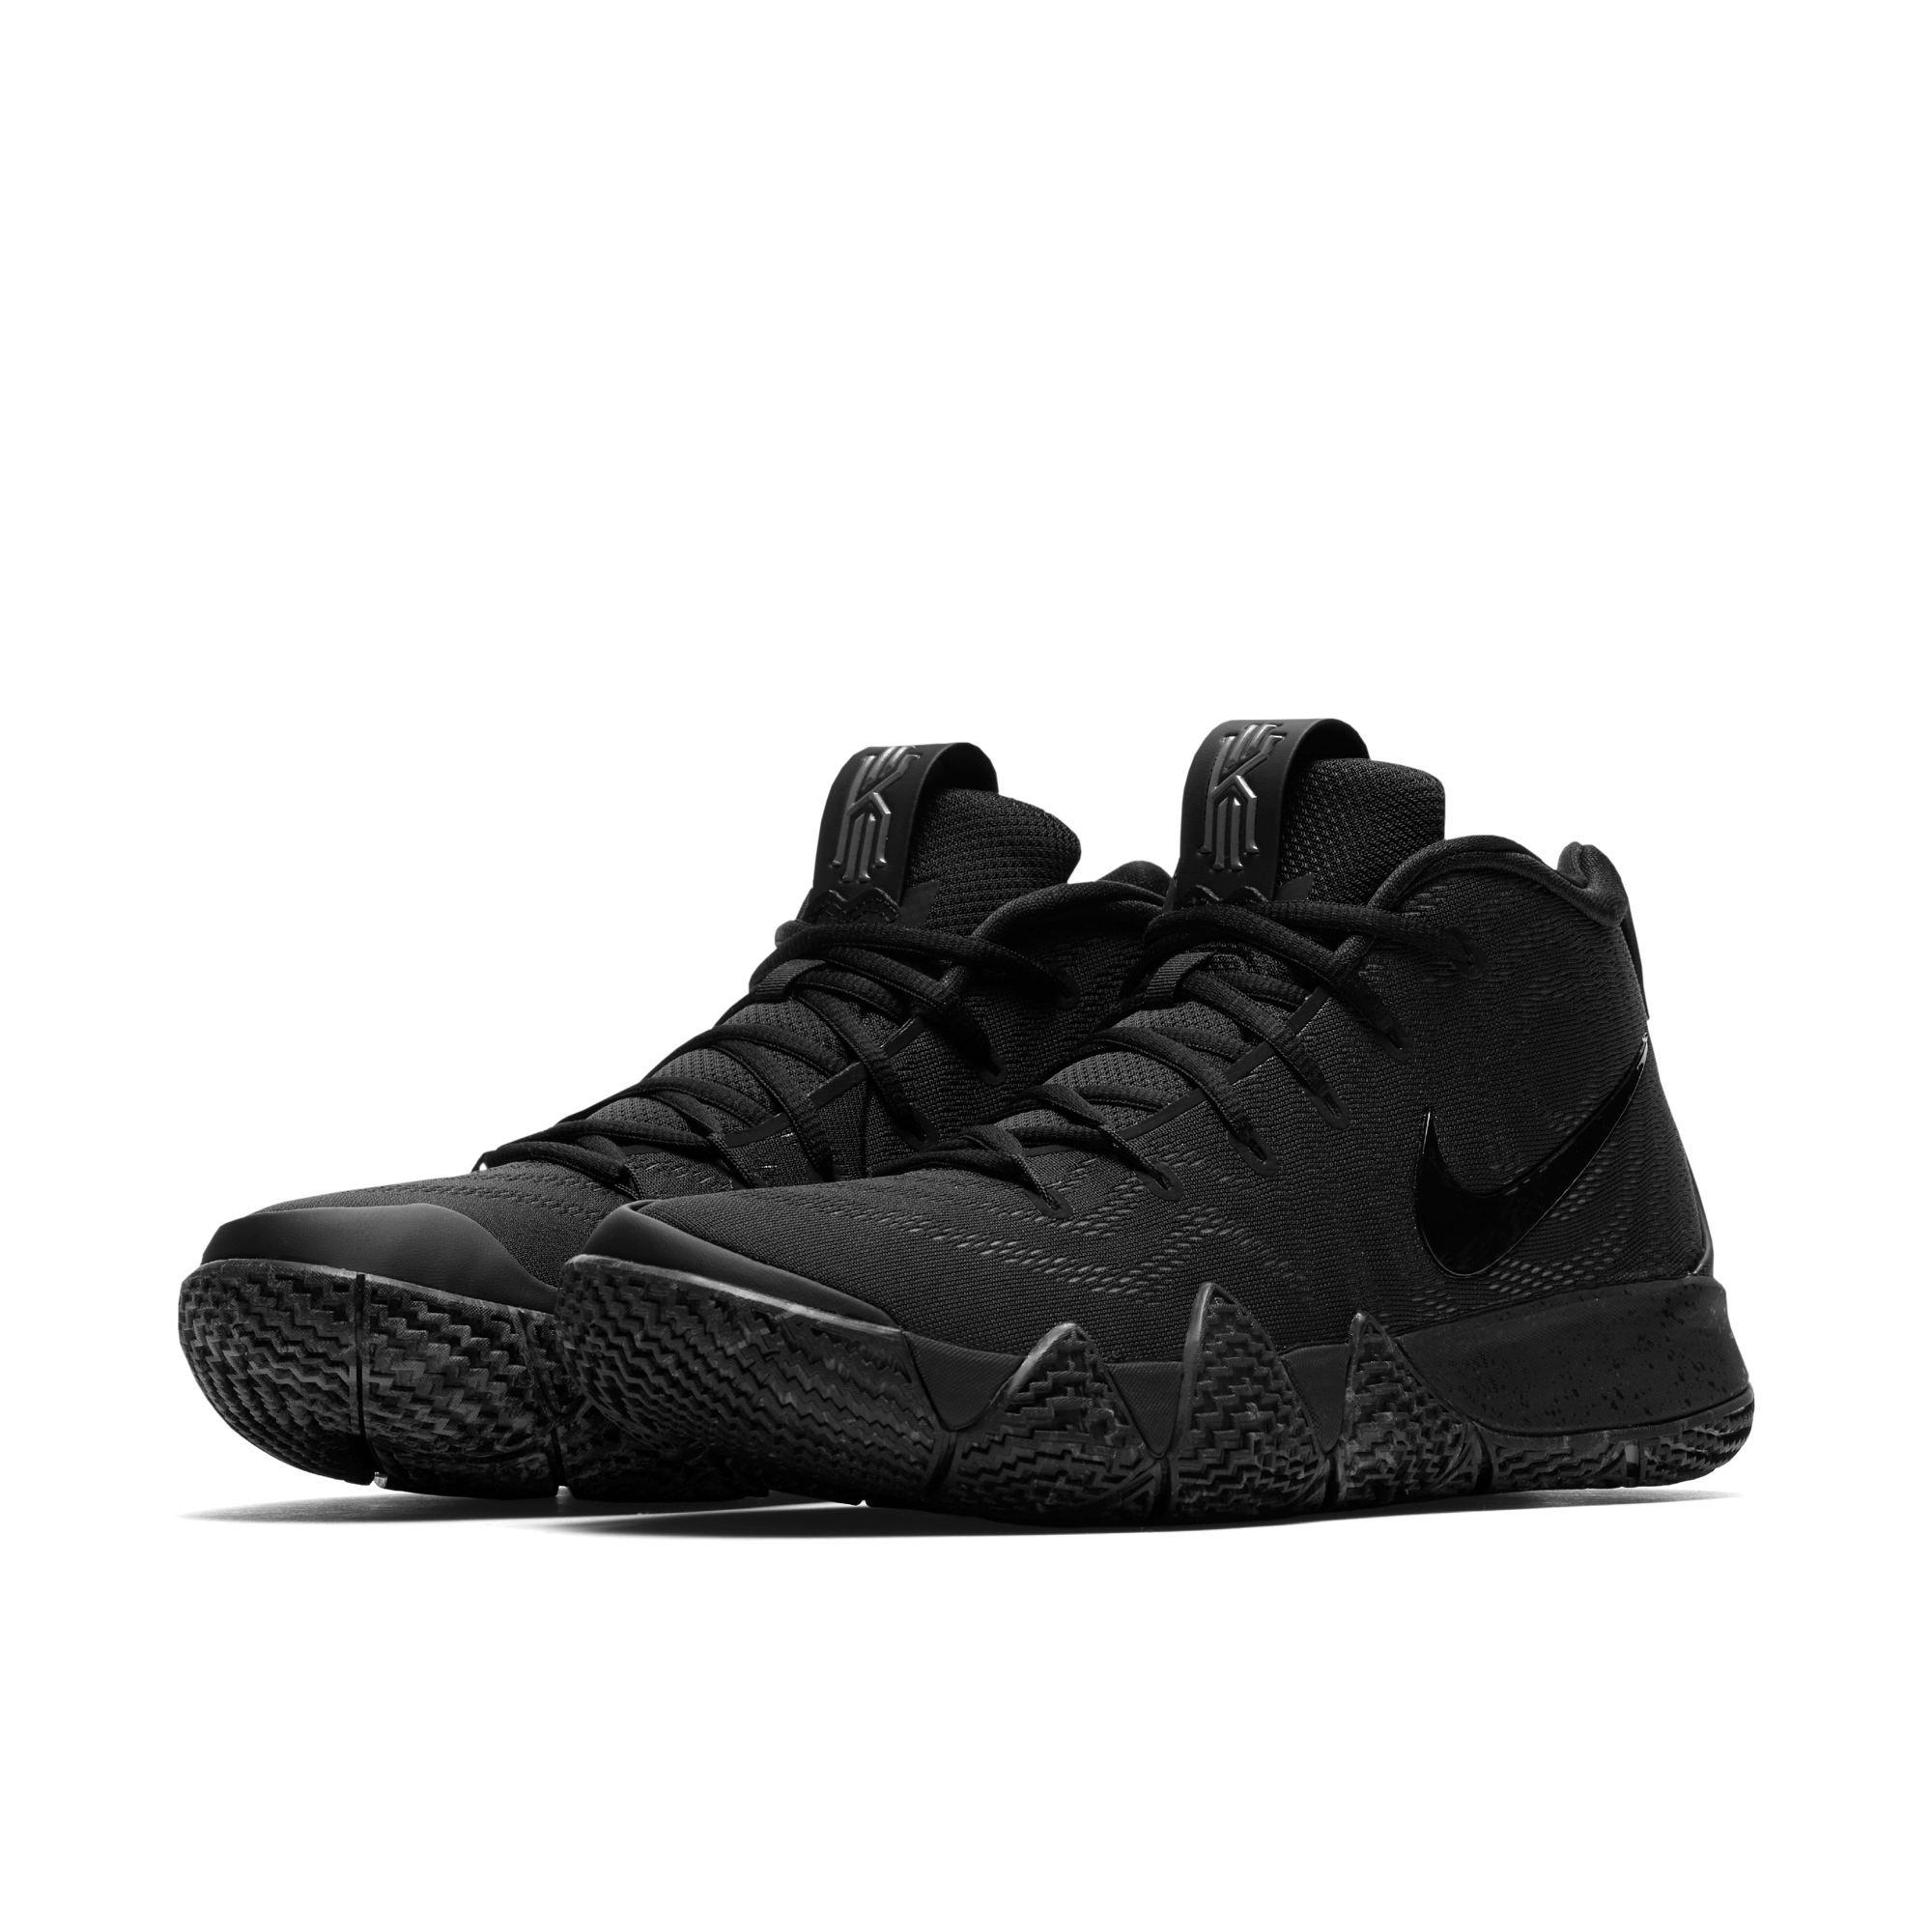 kyrie 4 shoes black